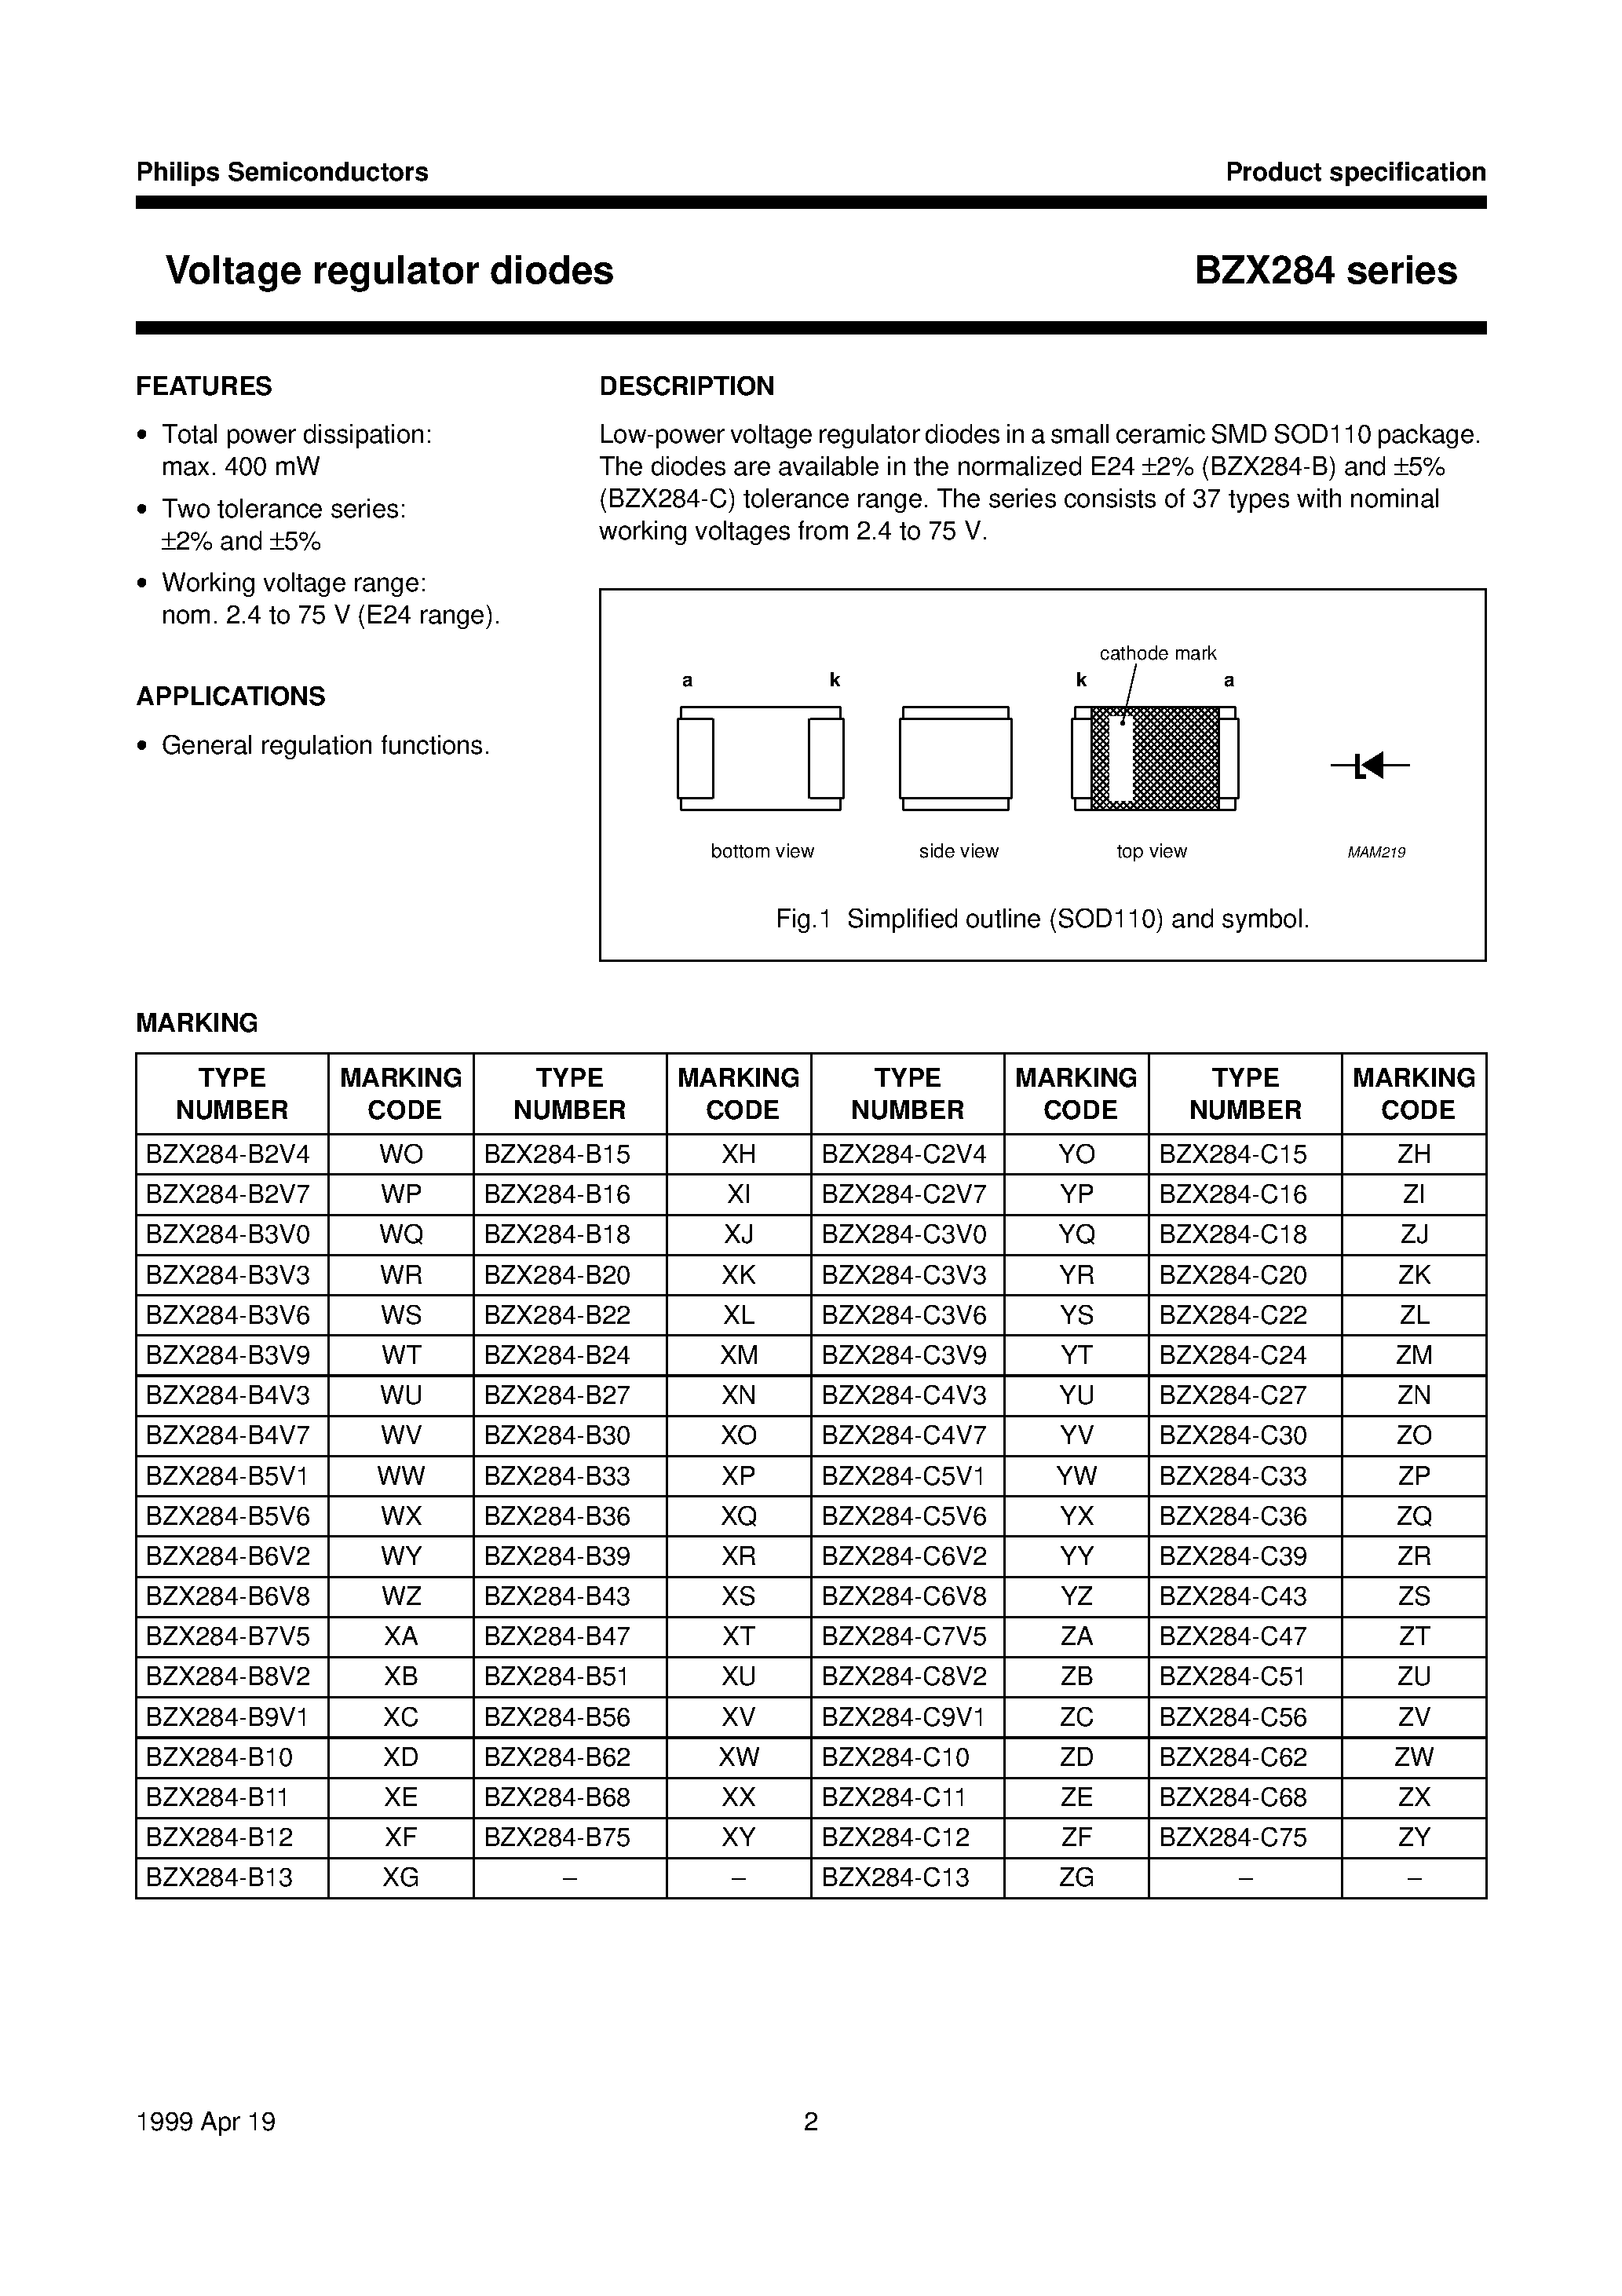 Datasheet BZX284-B8V2 - Voltage regulator diodes page 2